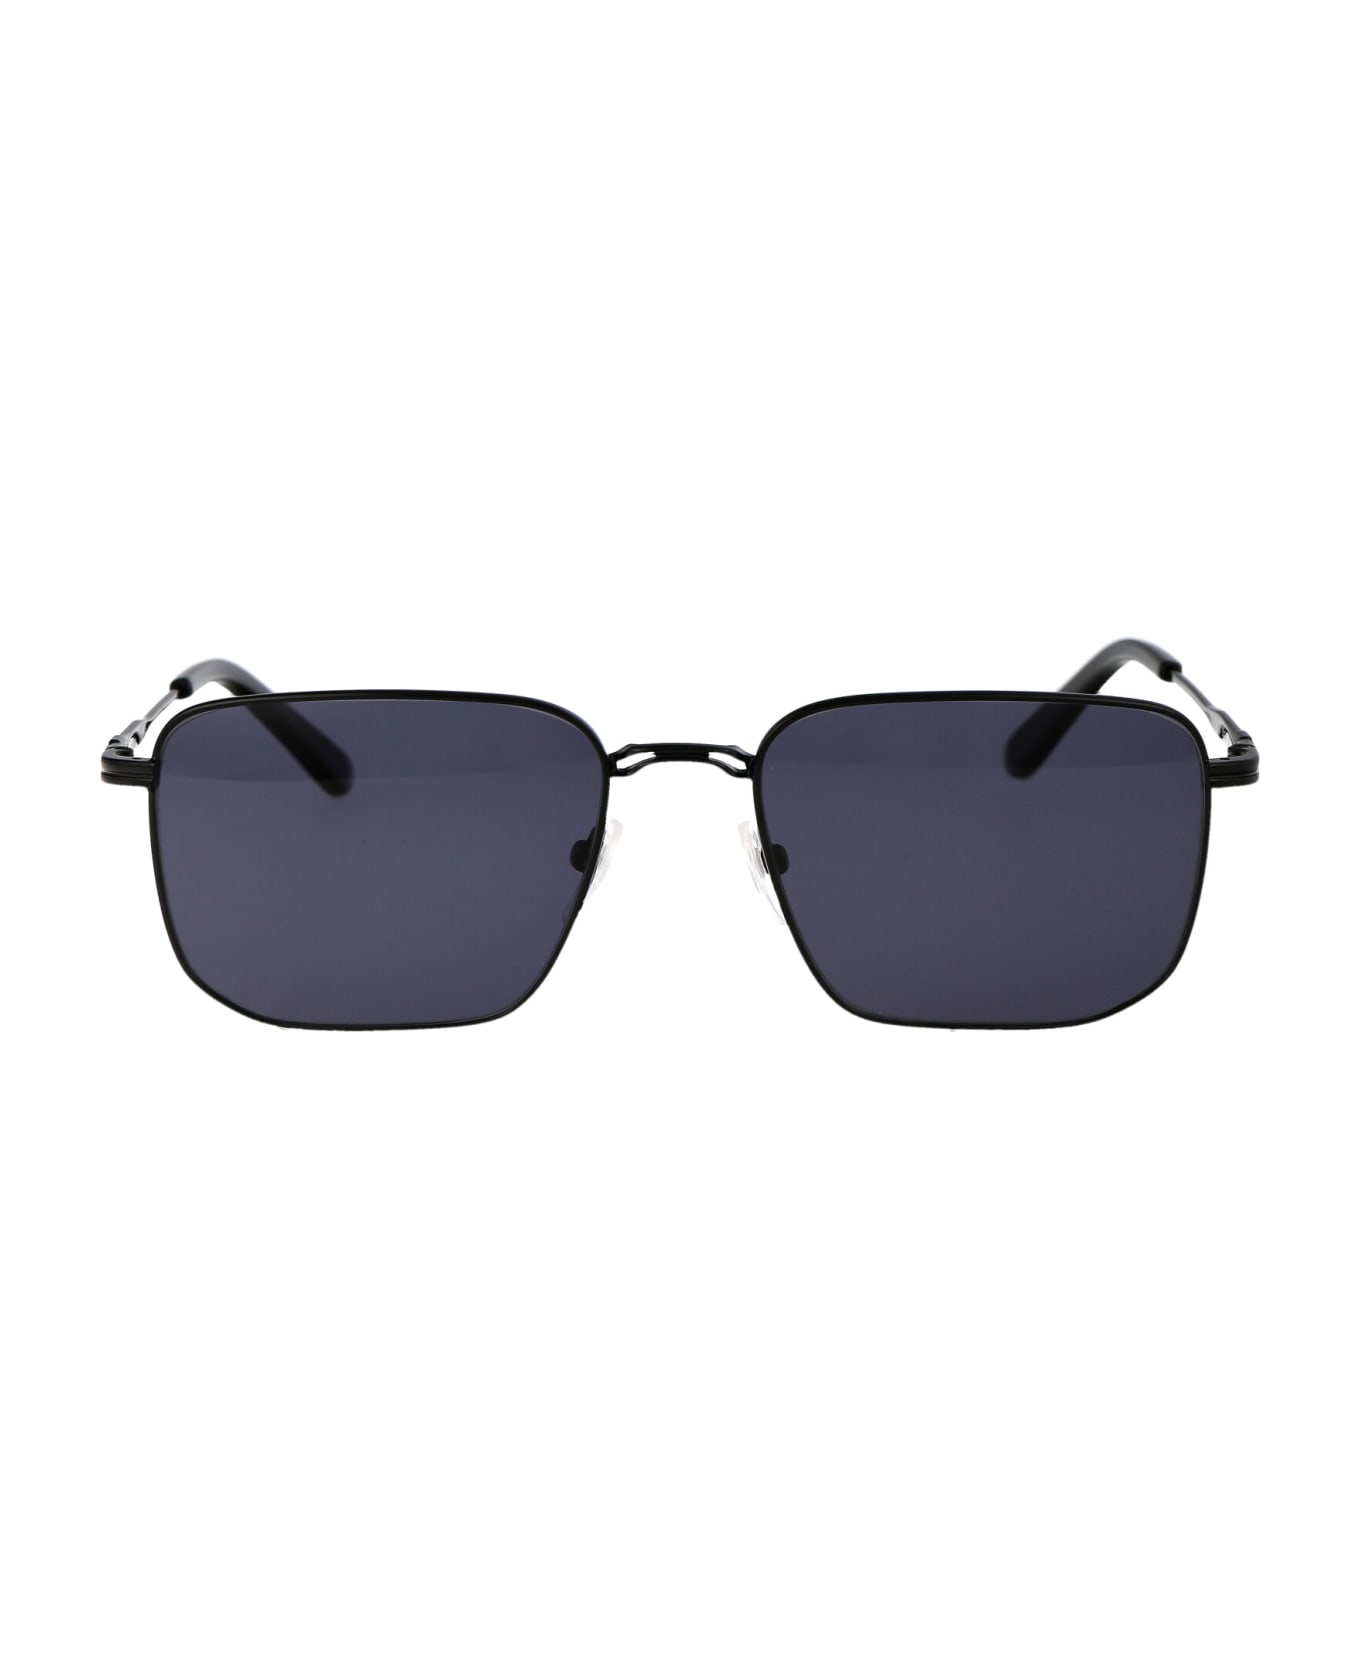 Calvin Klein Ck23101s Sunglasses - 001 BLACK